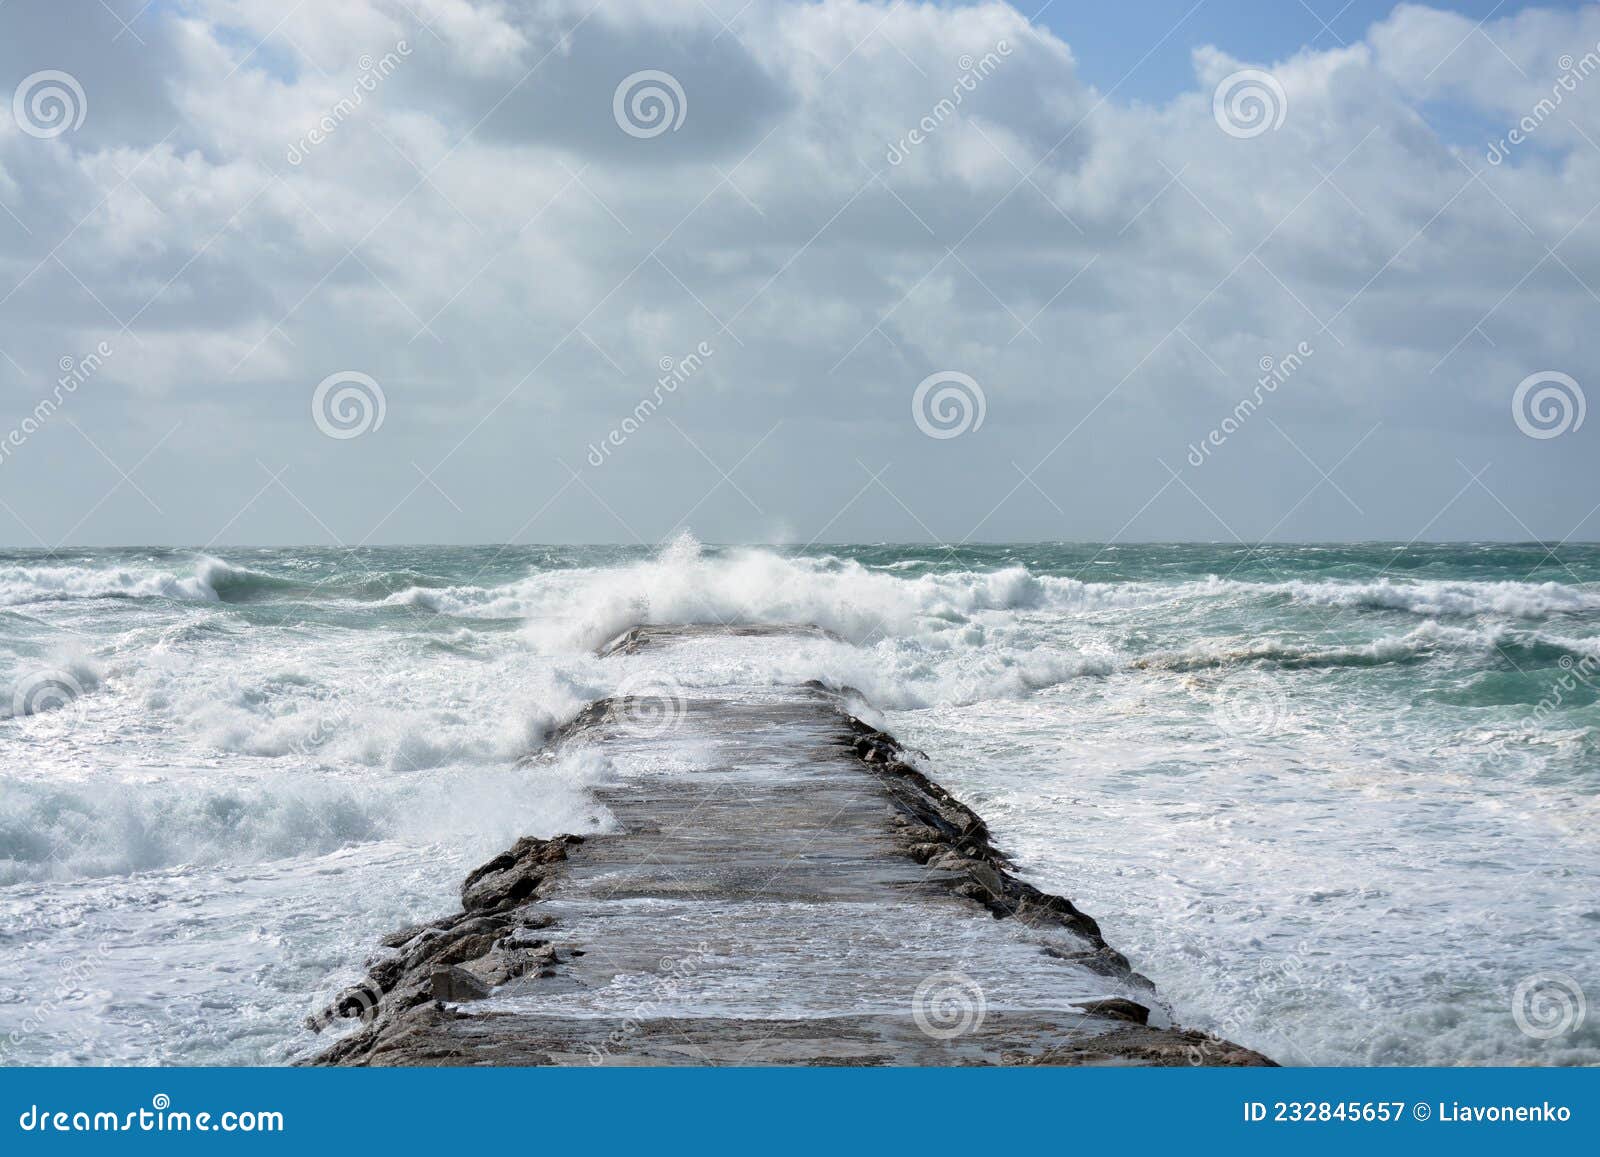 atlantic ocean beach. waves in portugal coast. season specific.